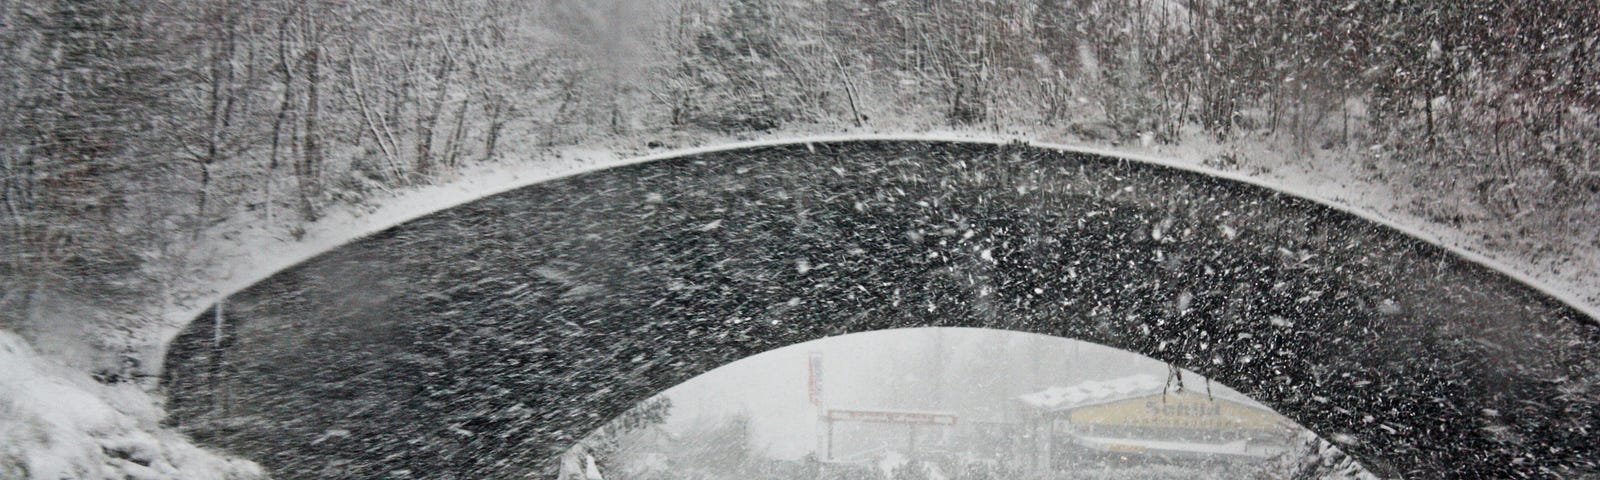 Car on snowy road, driving beneath bridge